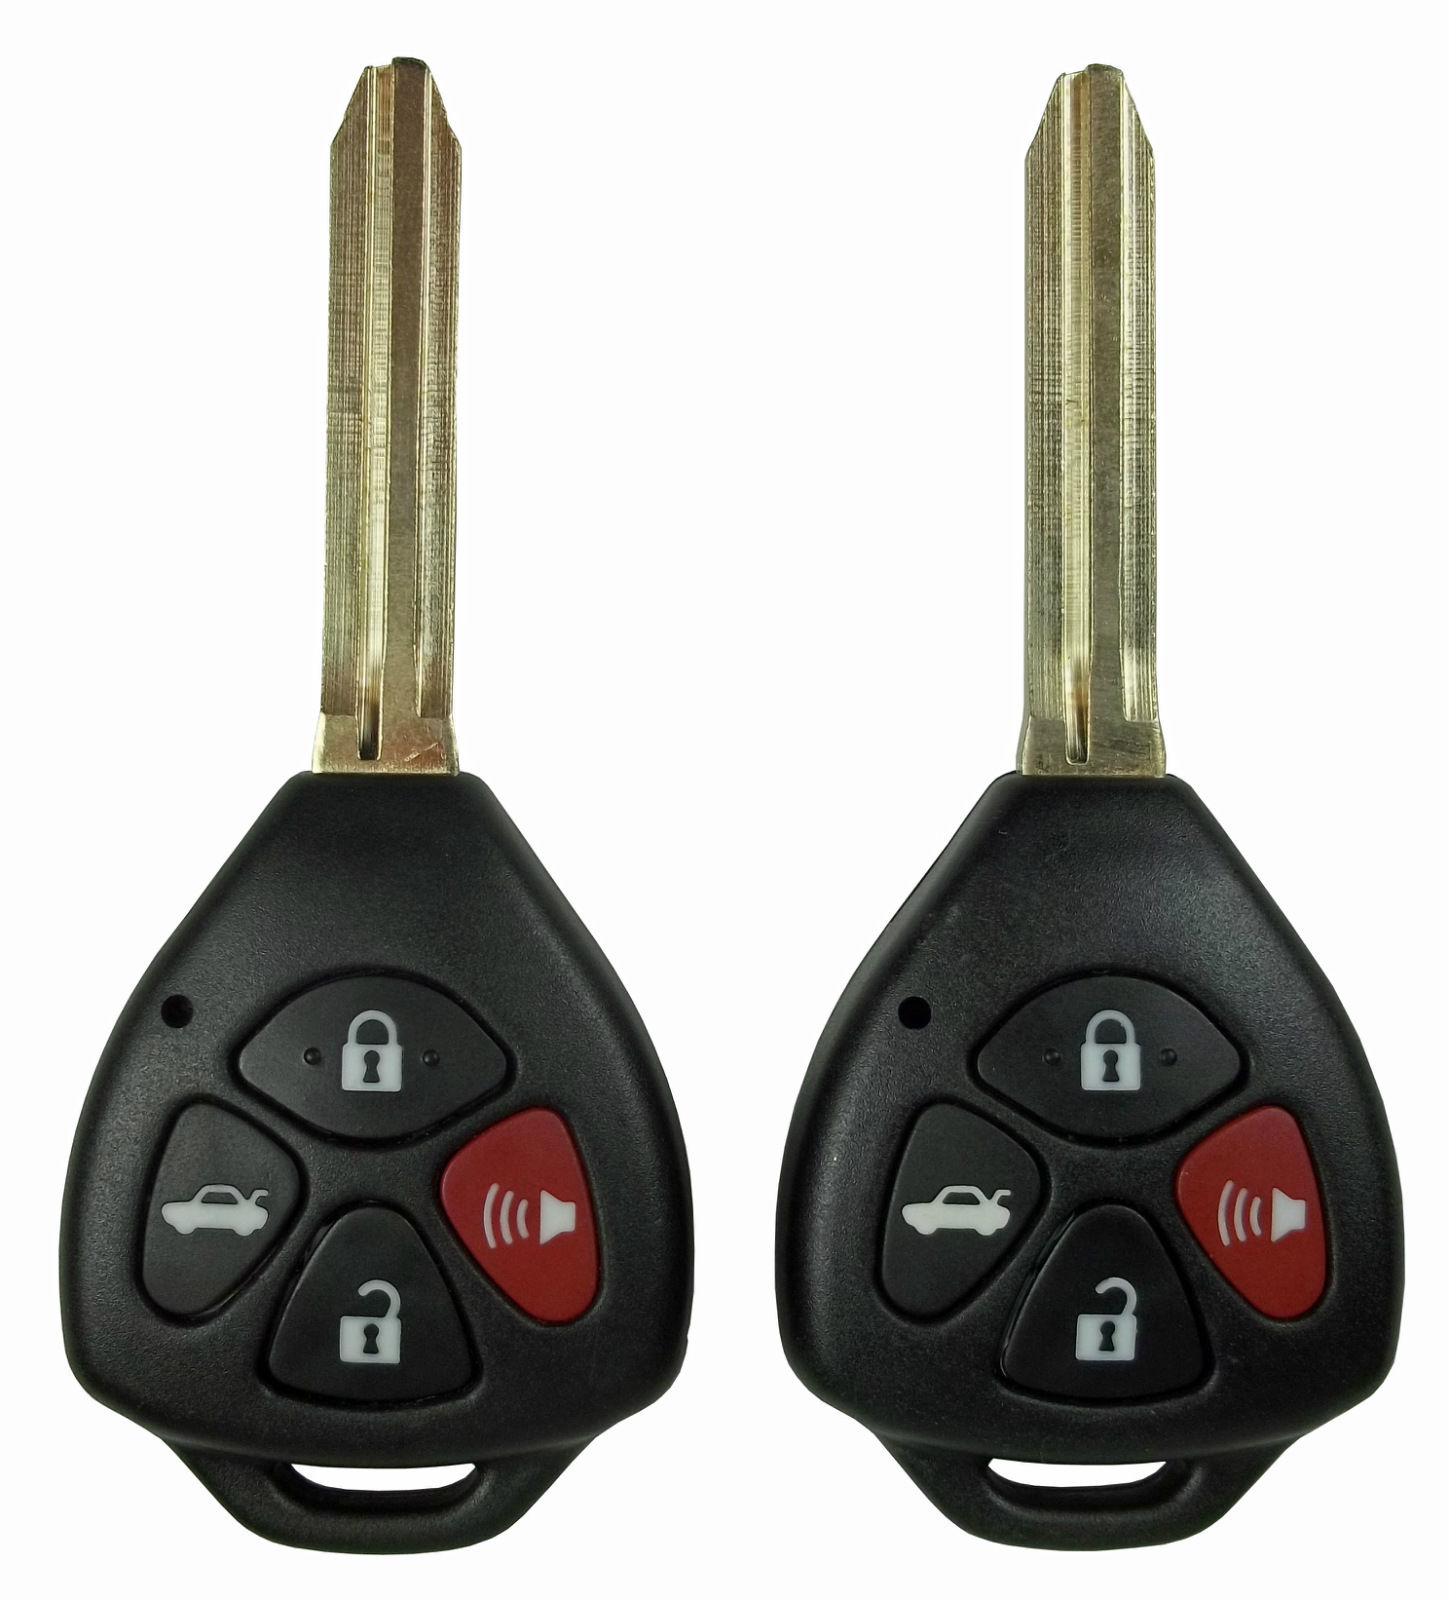 Toyota remotehead transponder keys